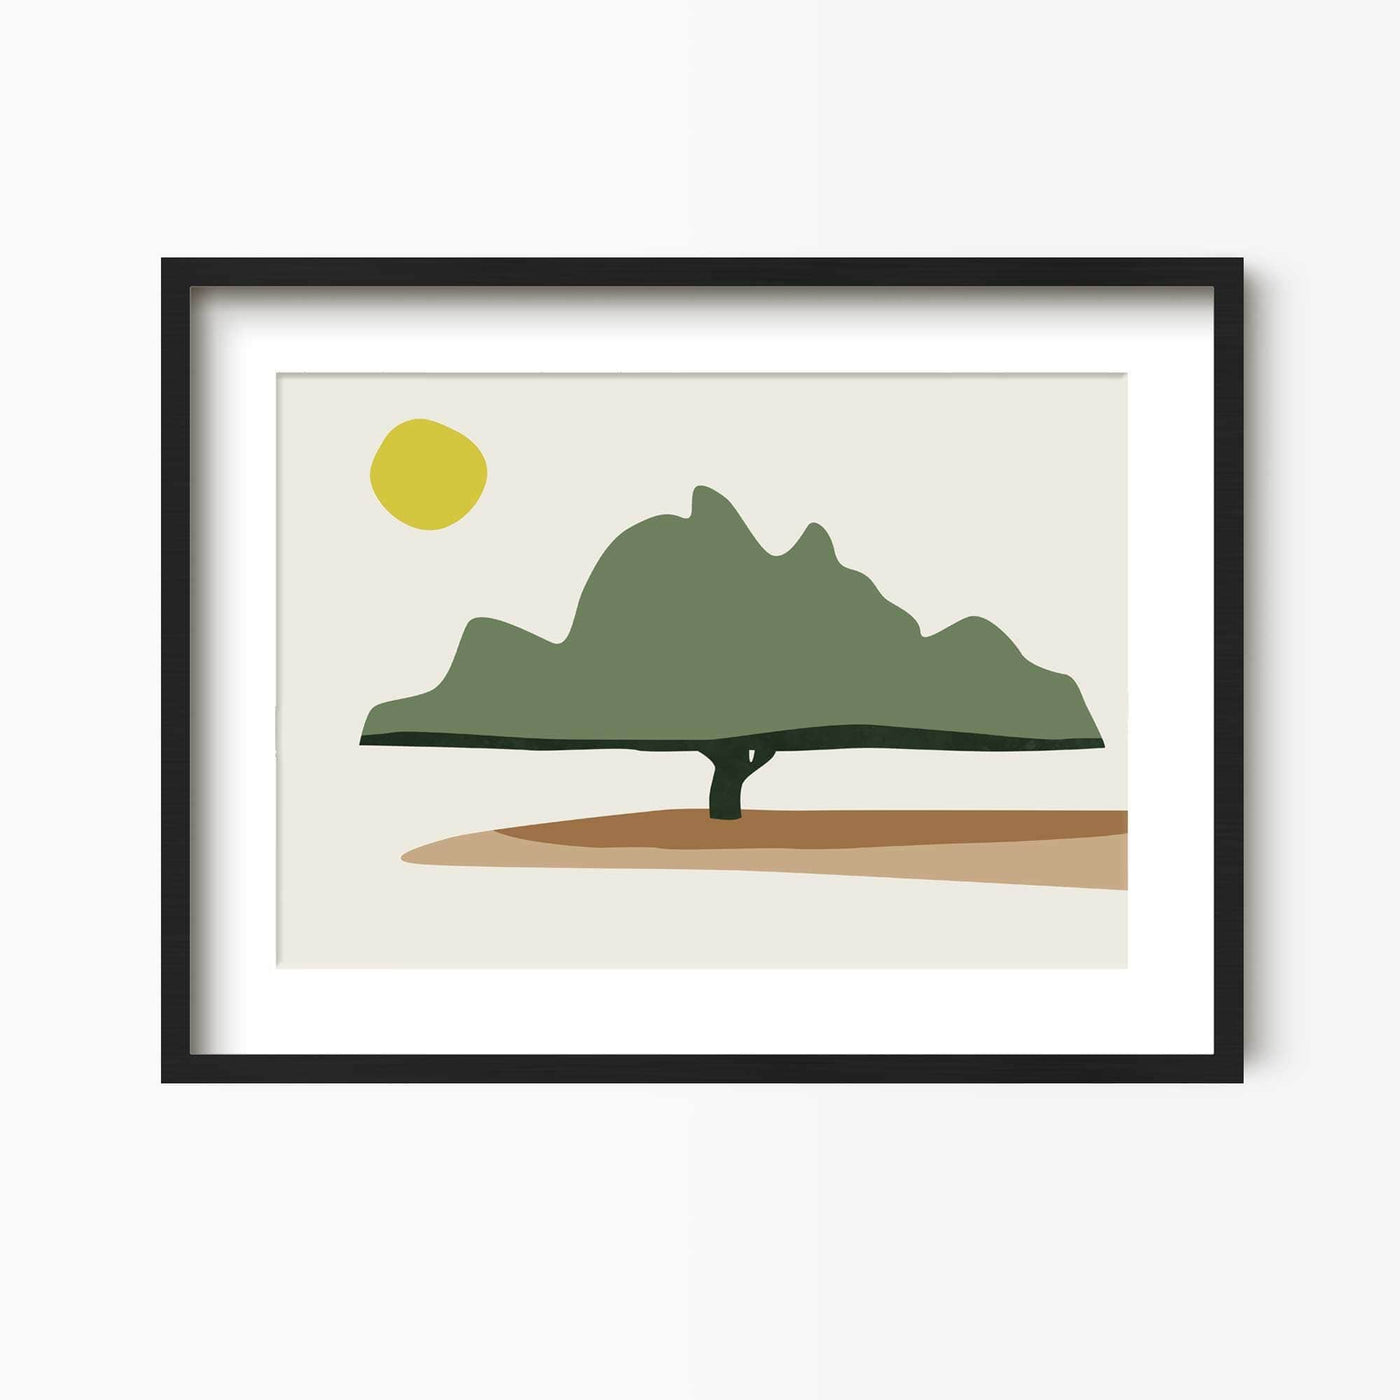 Green Lili 30x40cm (12x16") / Black Frame + Mount Endcliffe Park Tree Sheffield Print